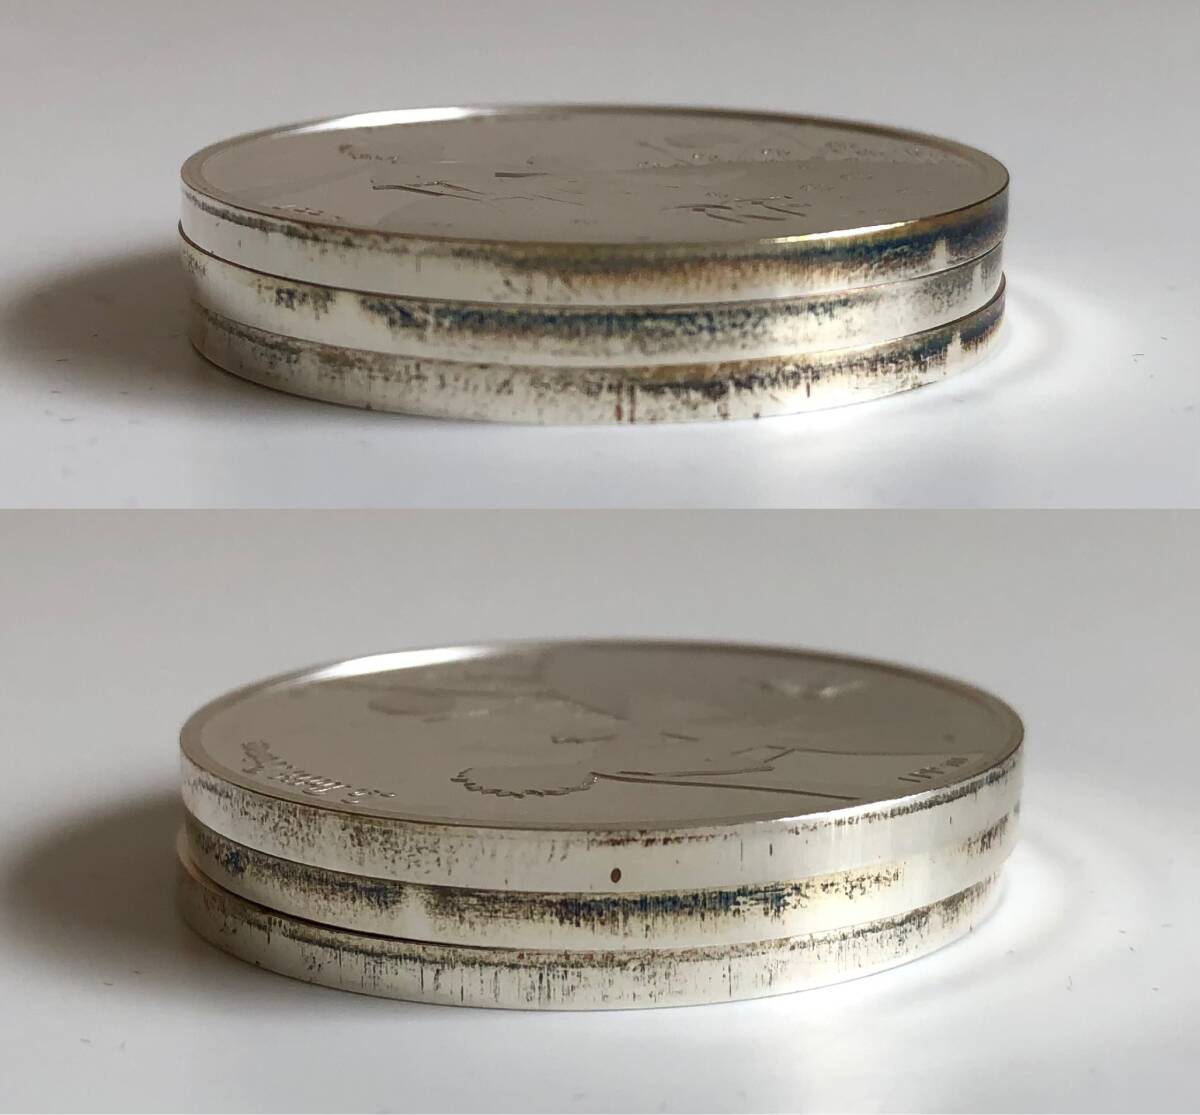 Le Petit Prince 星の王子さま フランス版発刊70周年記念コイン 2015 銀貨3種セット 10ユーロ銀貨 10euroの画像4